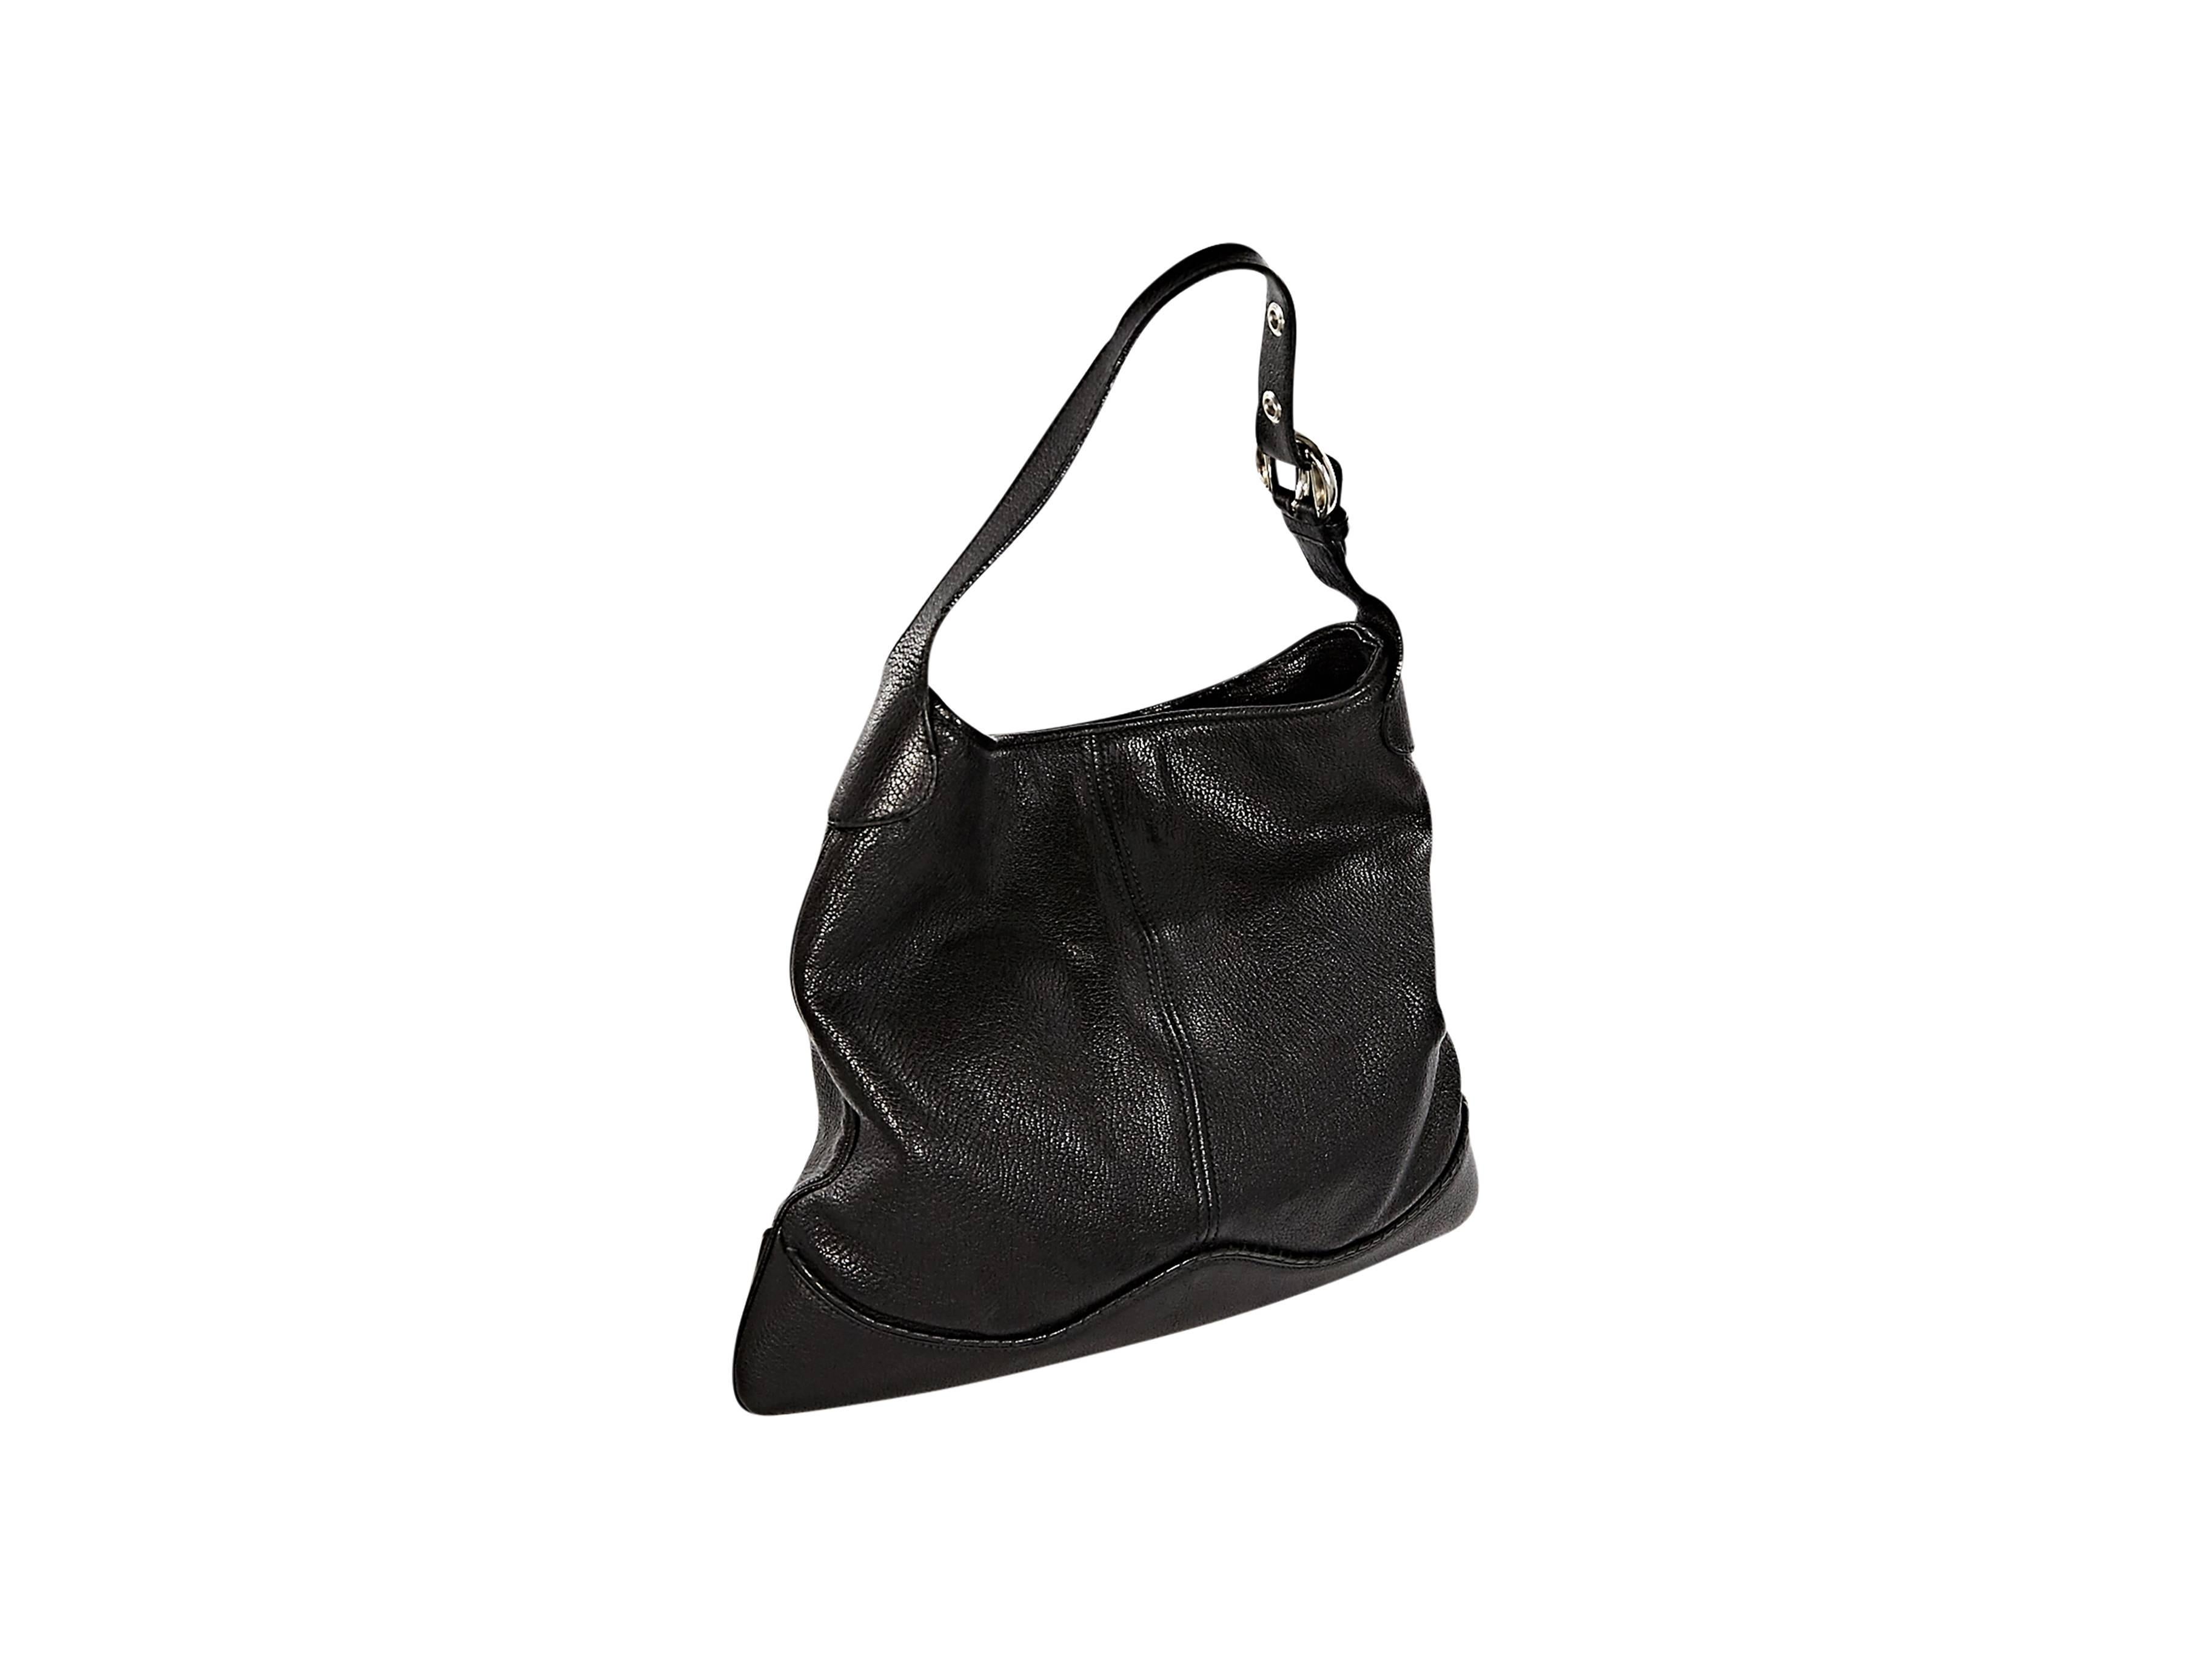 Black leather hobo bag by Alexander McQueen.  Single shoulder strap.  Twist-lock closure.  Lined interior with inner zip pocket.  Silvertone hardware. 10